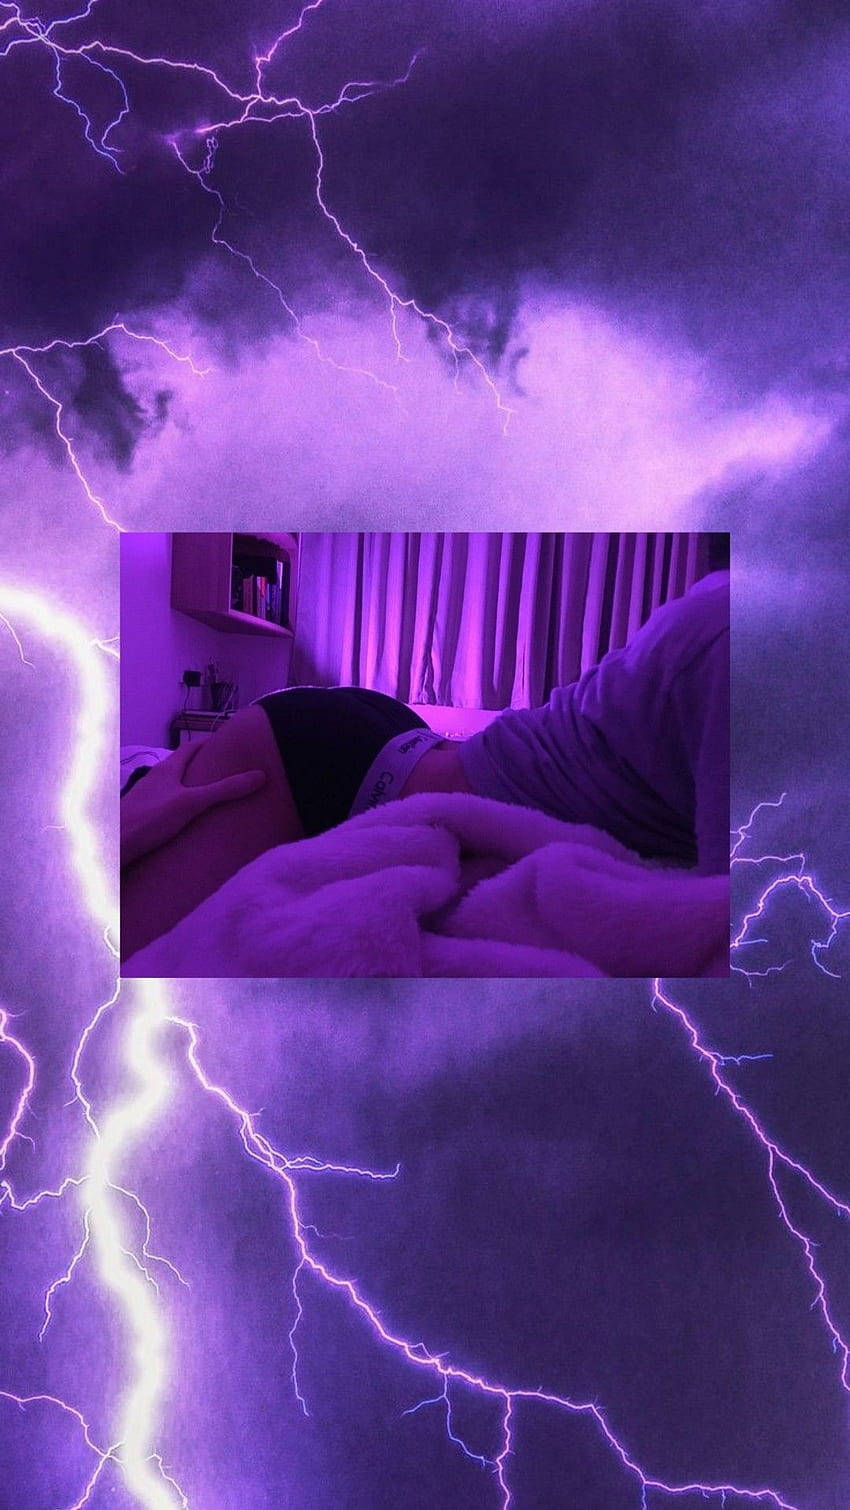 A Purple Lightning Storm